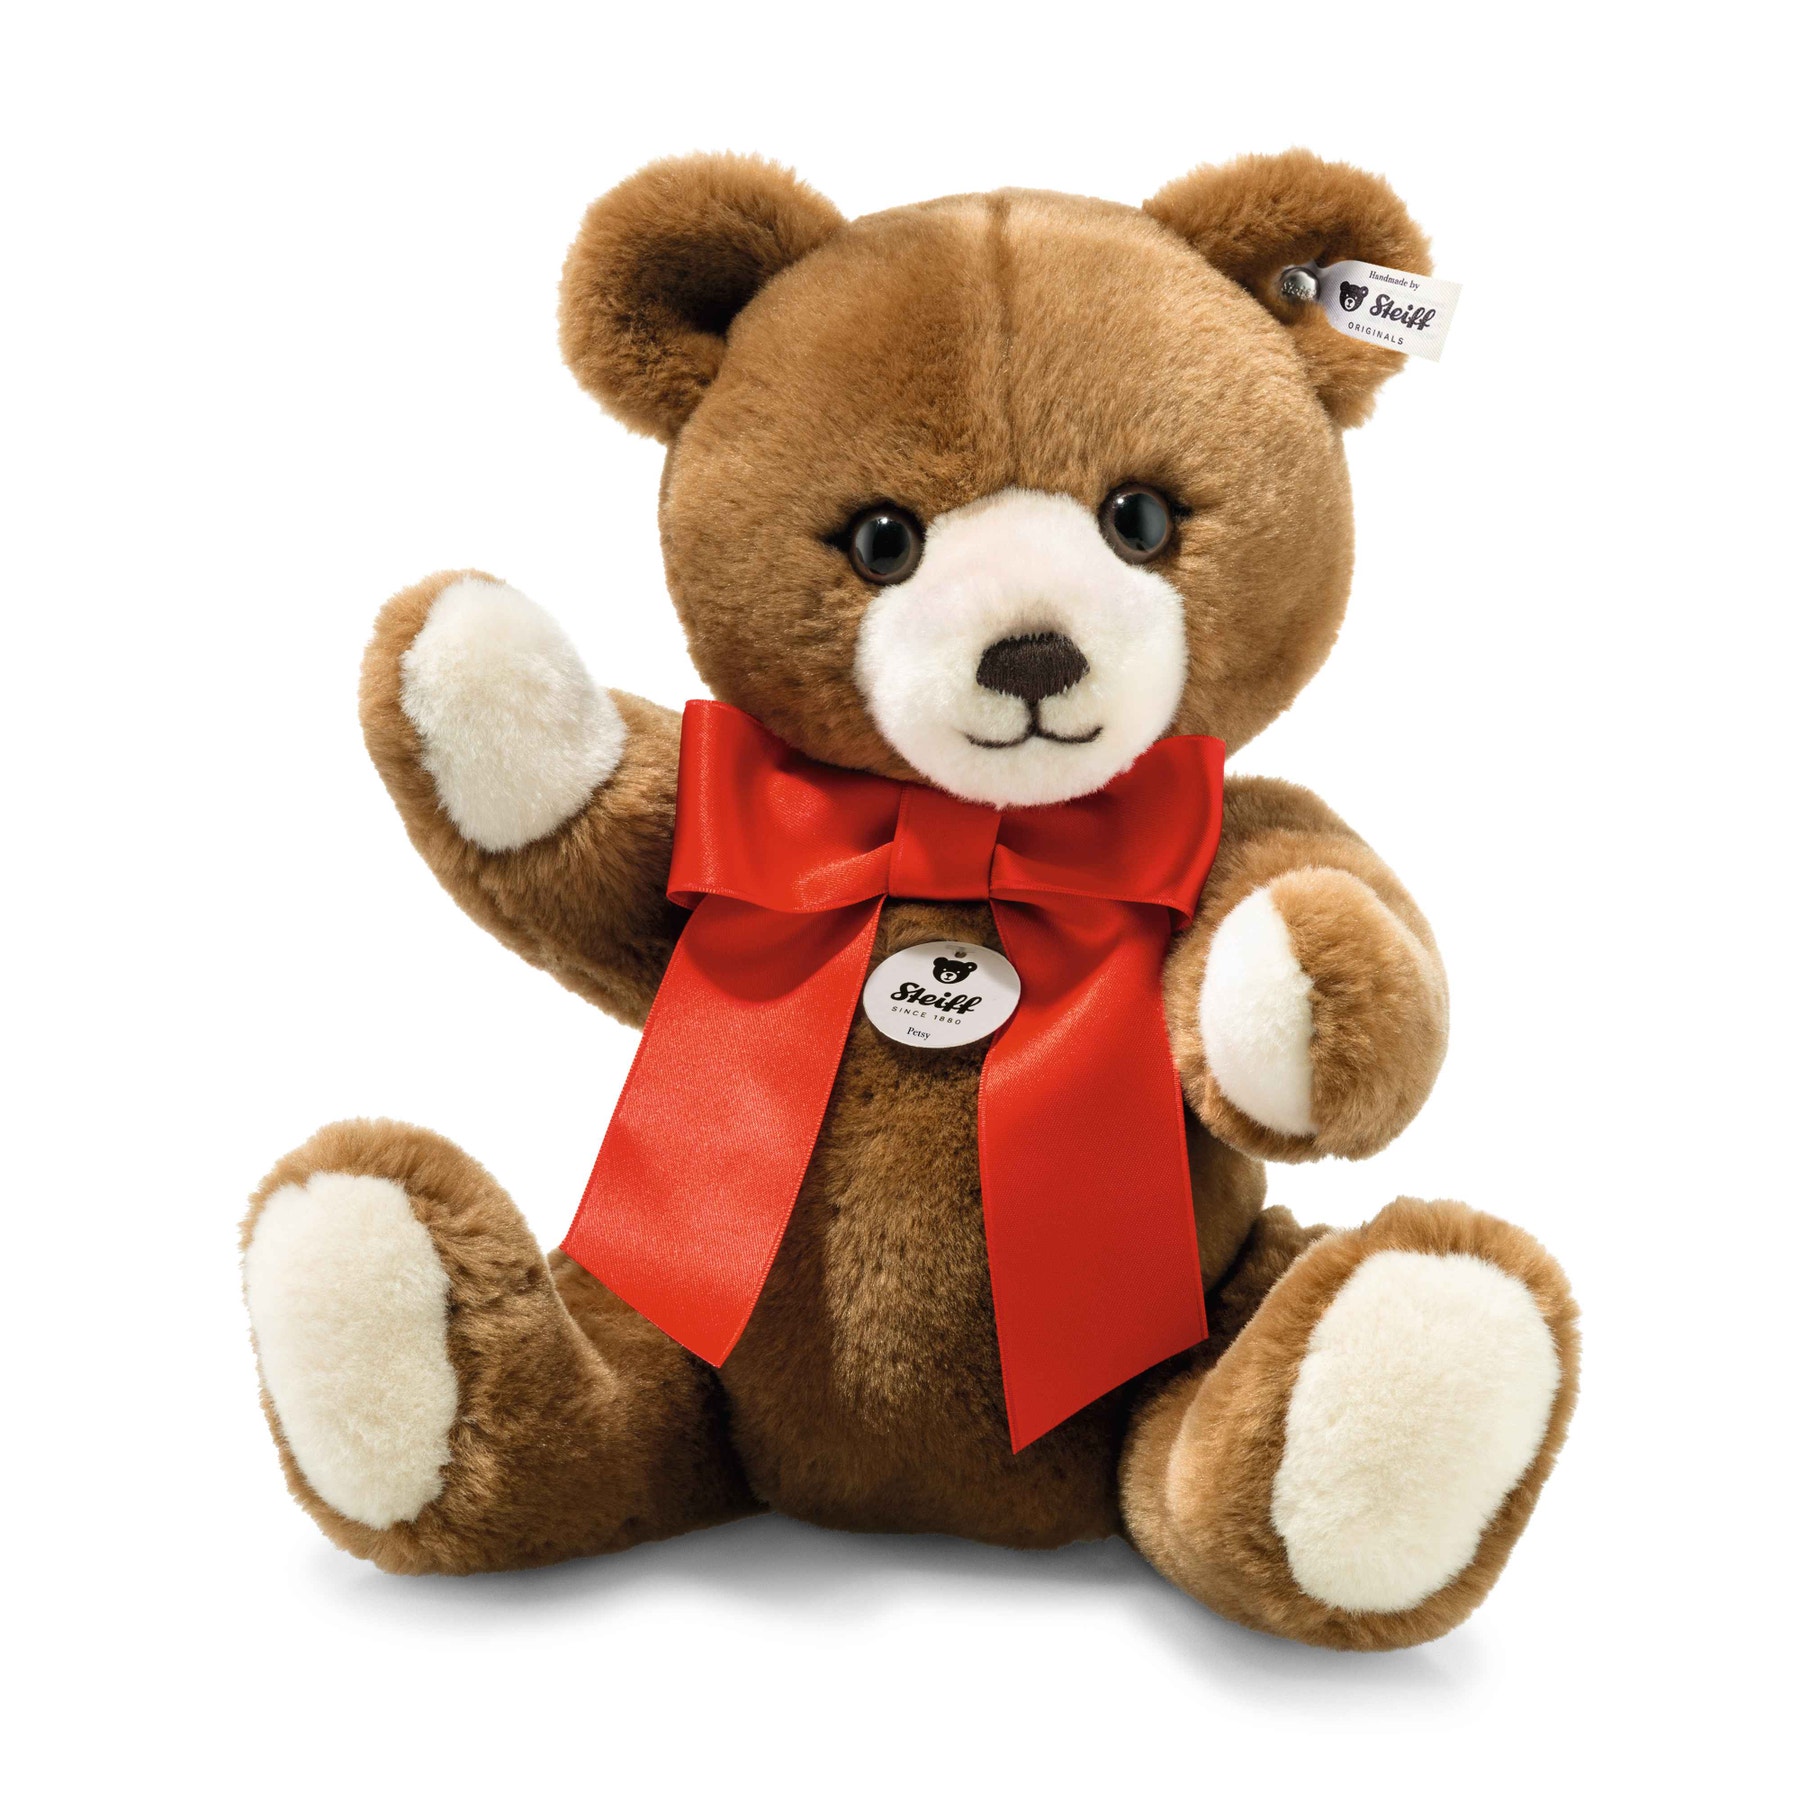 Petsy Teddy bear